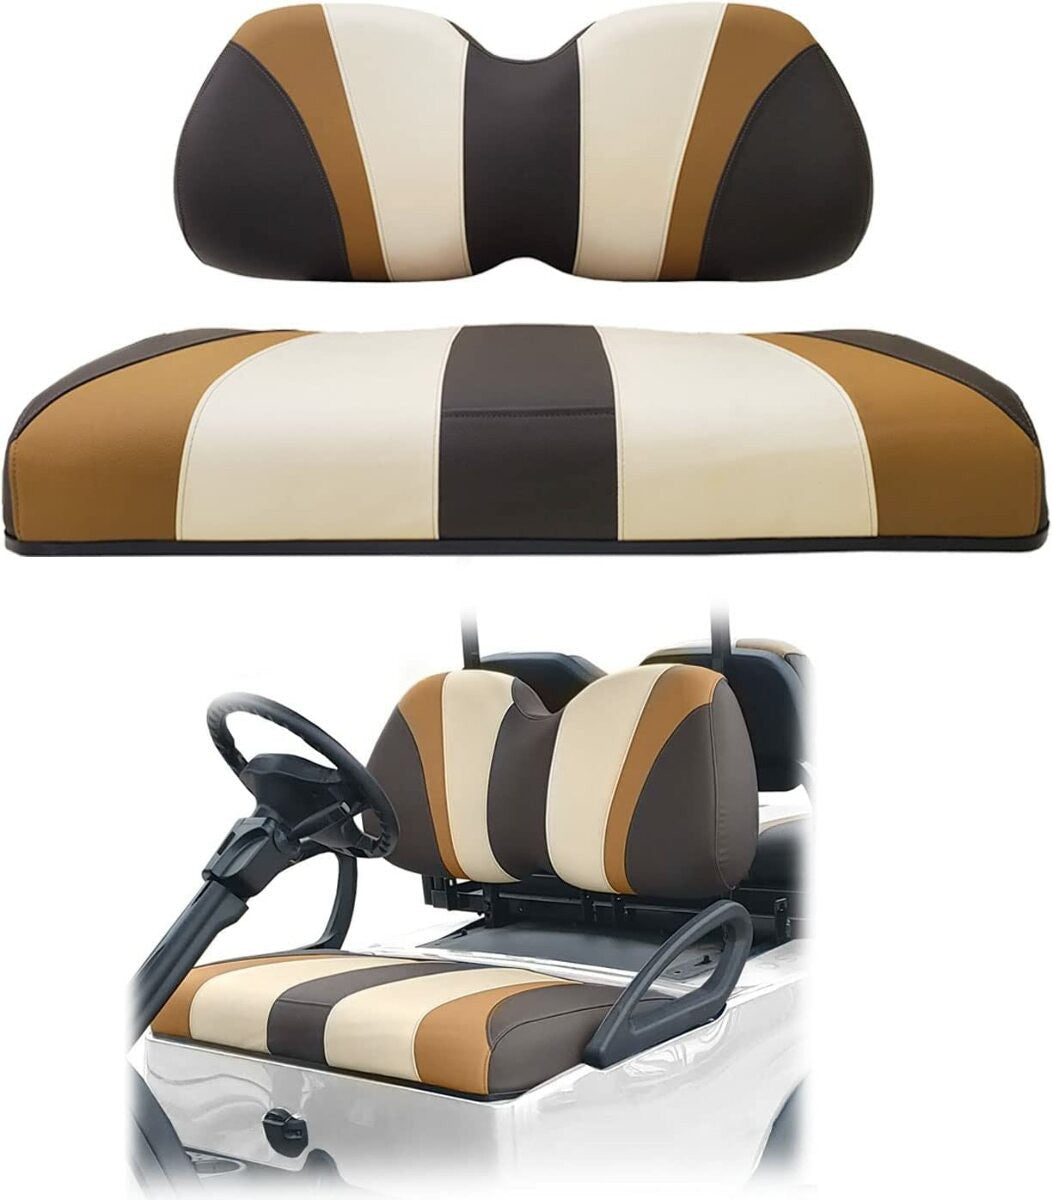 SlipStream Front Seat Cover Set Tan/Cream/Espresso - Fits Yamaha Drive & Drive2